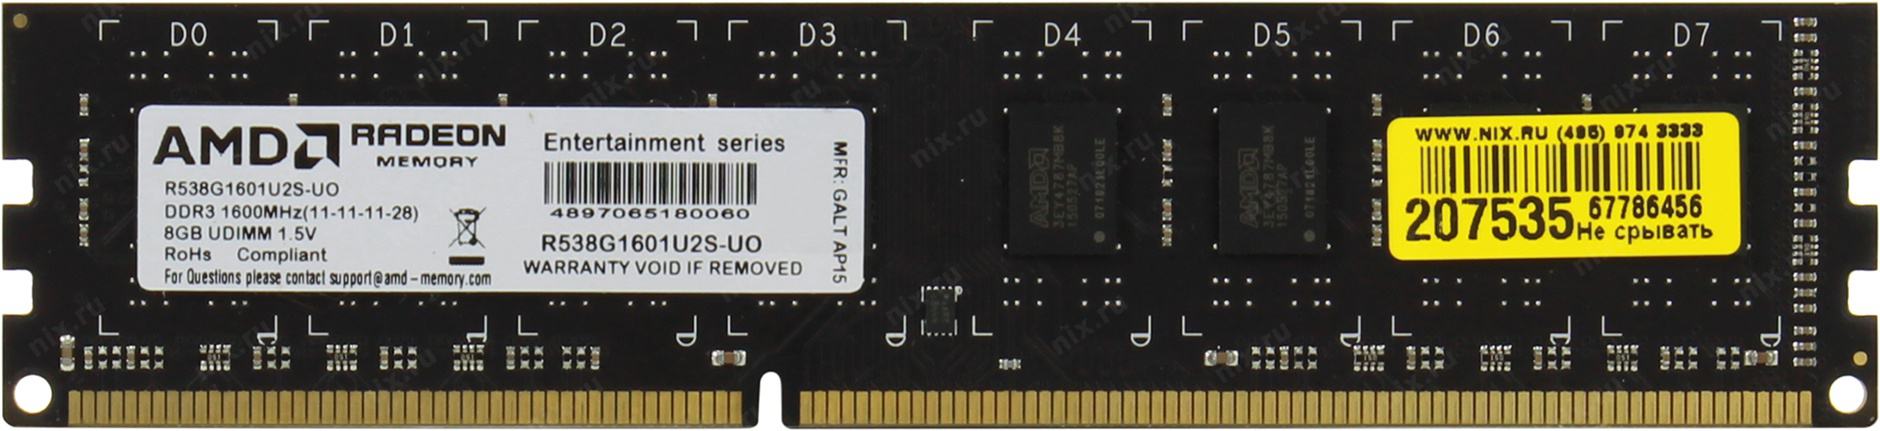 Оперативная память 2 гб amd. AMD r538g1601s2s-u ddr3 - 8гб. AMD r538g1601s2s-uo ddr3 - 8гб. Оперативная память AMD Radeon r5 Entertainment Series [r538g1601u2s-u] 8 ГБ. Оперативная память AMD Radeon r5 Entertainment Series [r532g1601u1s-u] 2 ГБ.